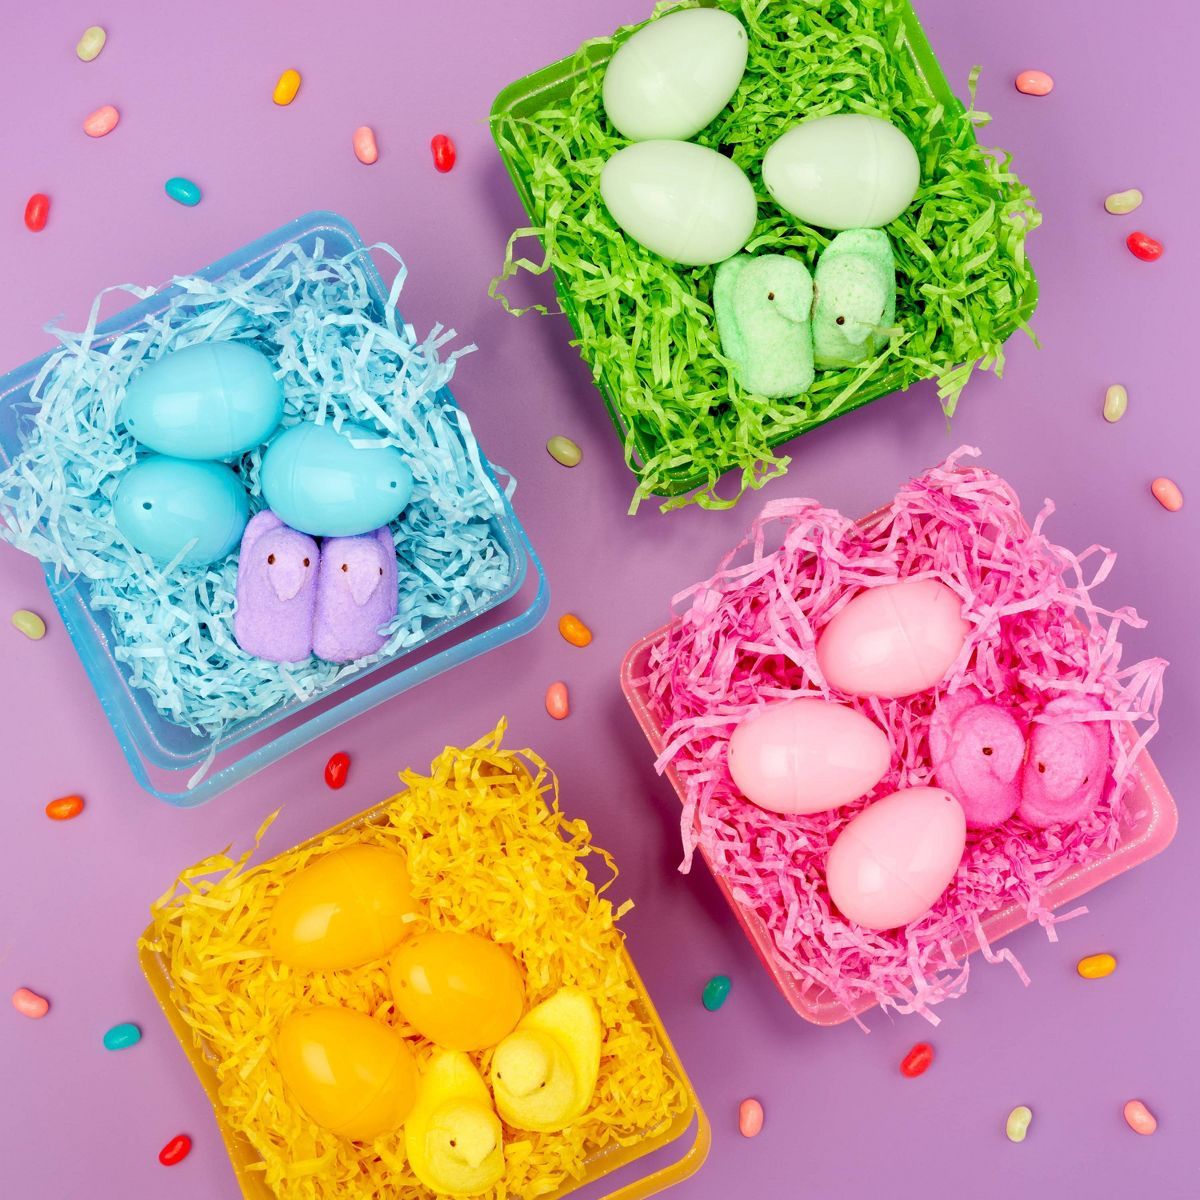 Easter Plastic Berry Basket Green - Spritz™ | Target